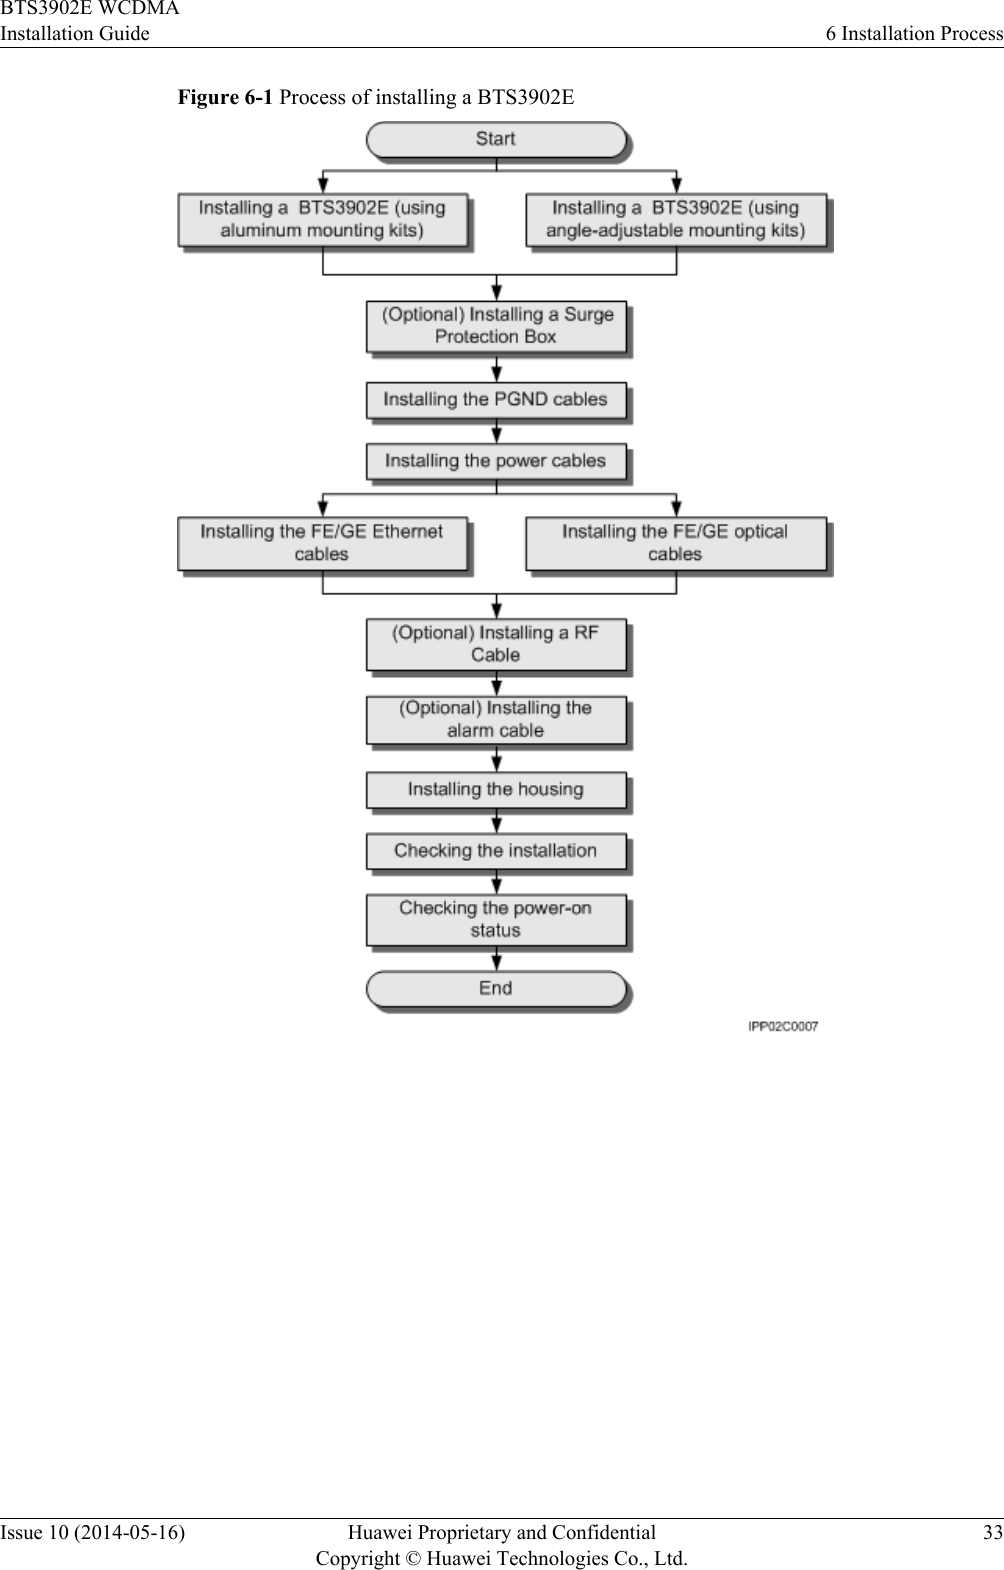 Figure 6-1 Process of installing a BTS3902E BTS3902E WCDMAInstallation Guide 6 Installation ProcessIssue 10 (2014-05-16) Huawei Proprietary and ConfidentialCopyright © Huawei Technologies Co., Ltd.33